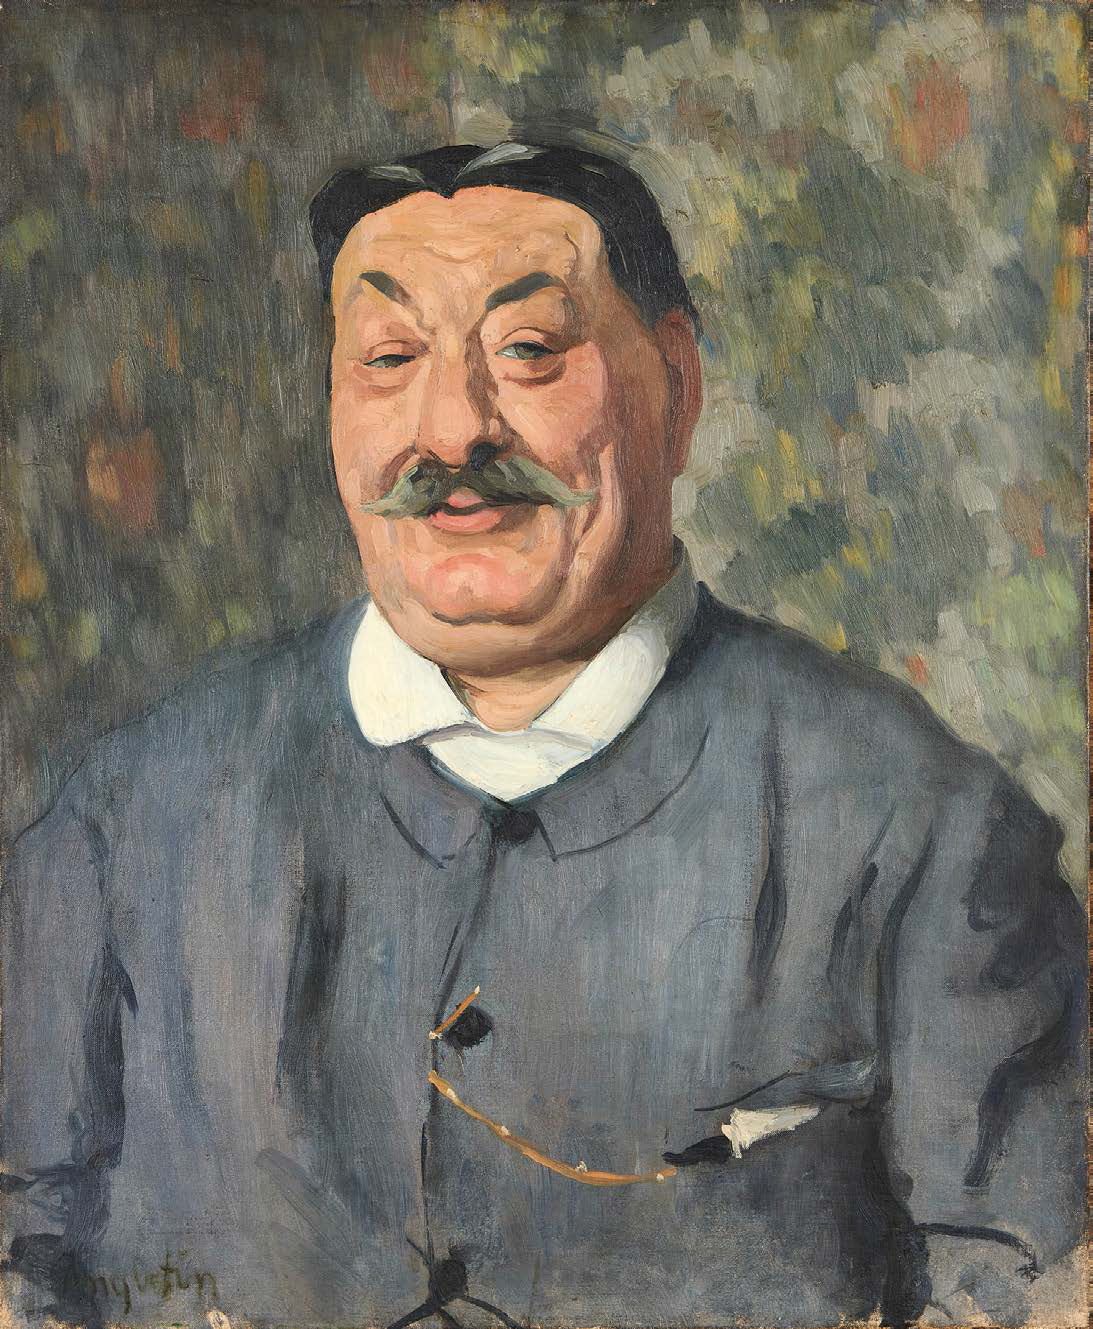 LOUIS ANQUETIN (1861-1932) 
一个人的肖像
布面油画，左下角有签名。
73 x 60 cm